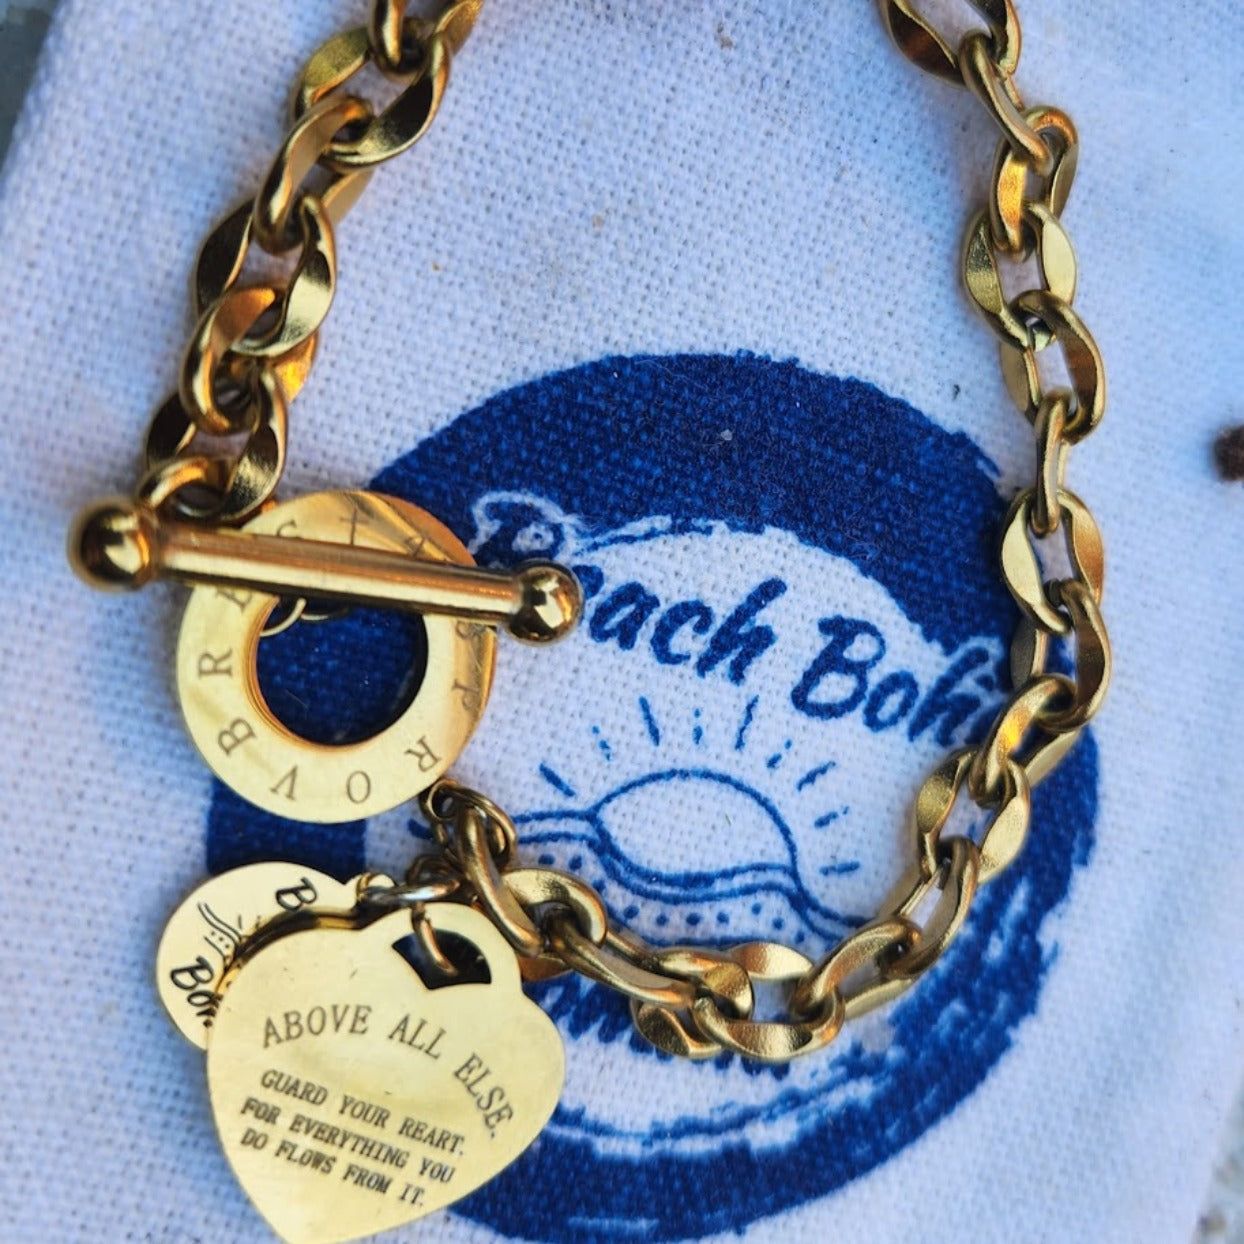 ABOVE ALL ELSE - 18K ROSE GOLD / GOLD / SILVER - WATERPROOF NECKLACE - Premium Bracelets from www.beachboho.com.au - Just $75! Shop now at www.beachboho.com.au